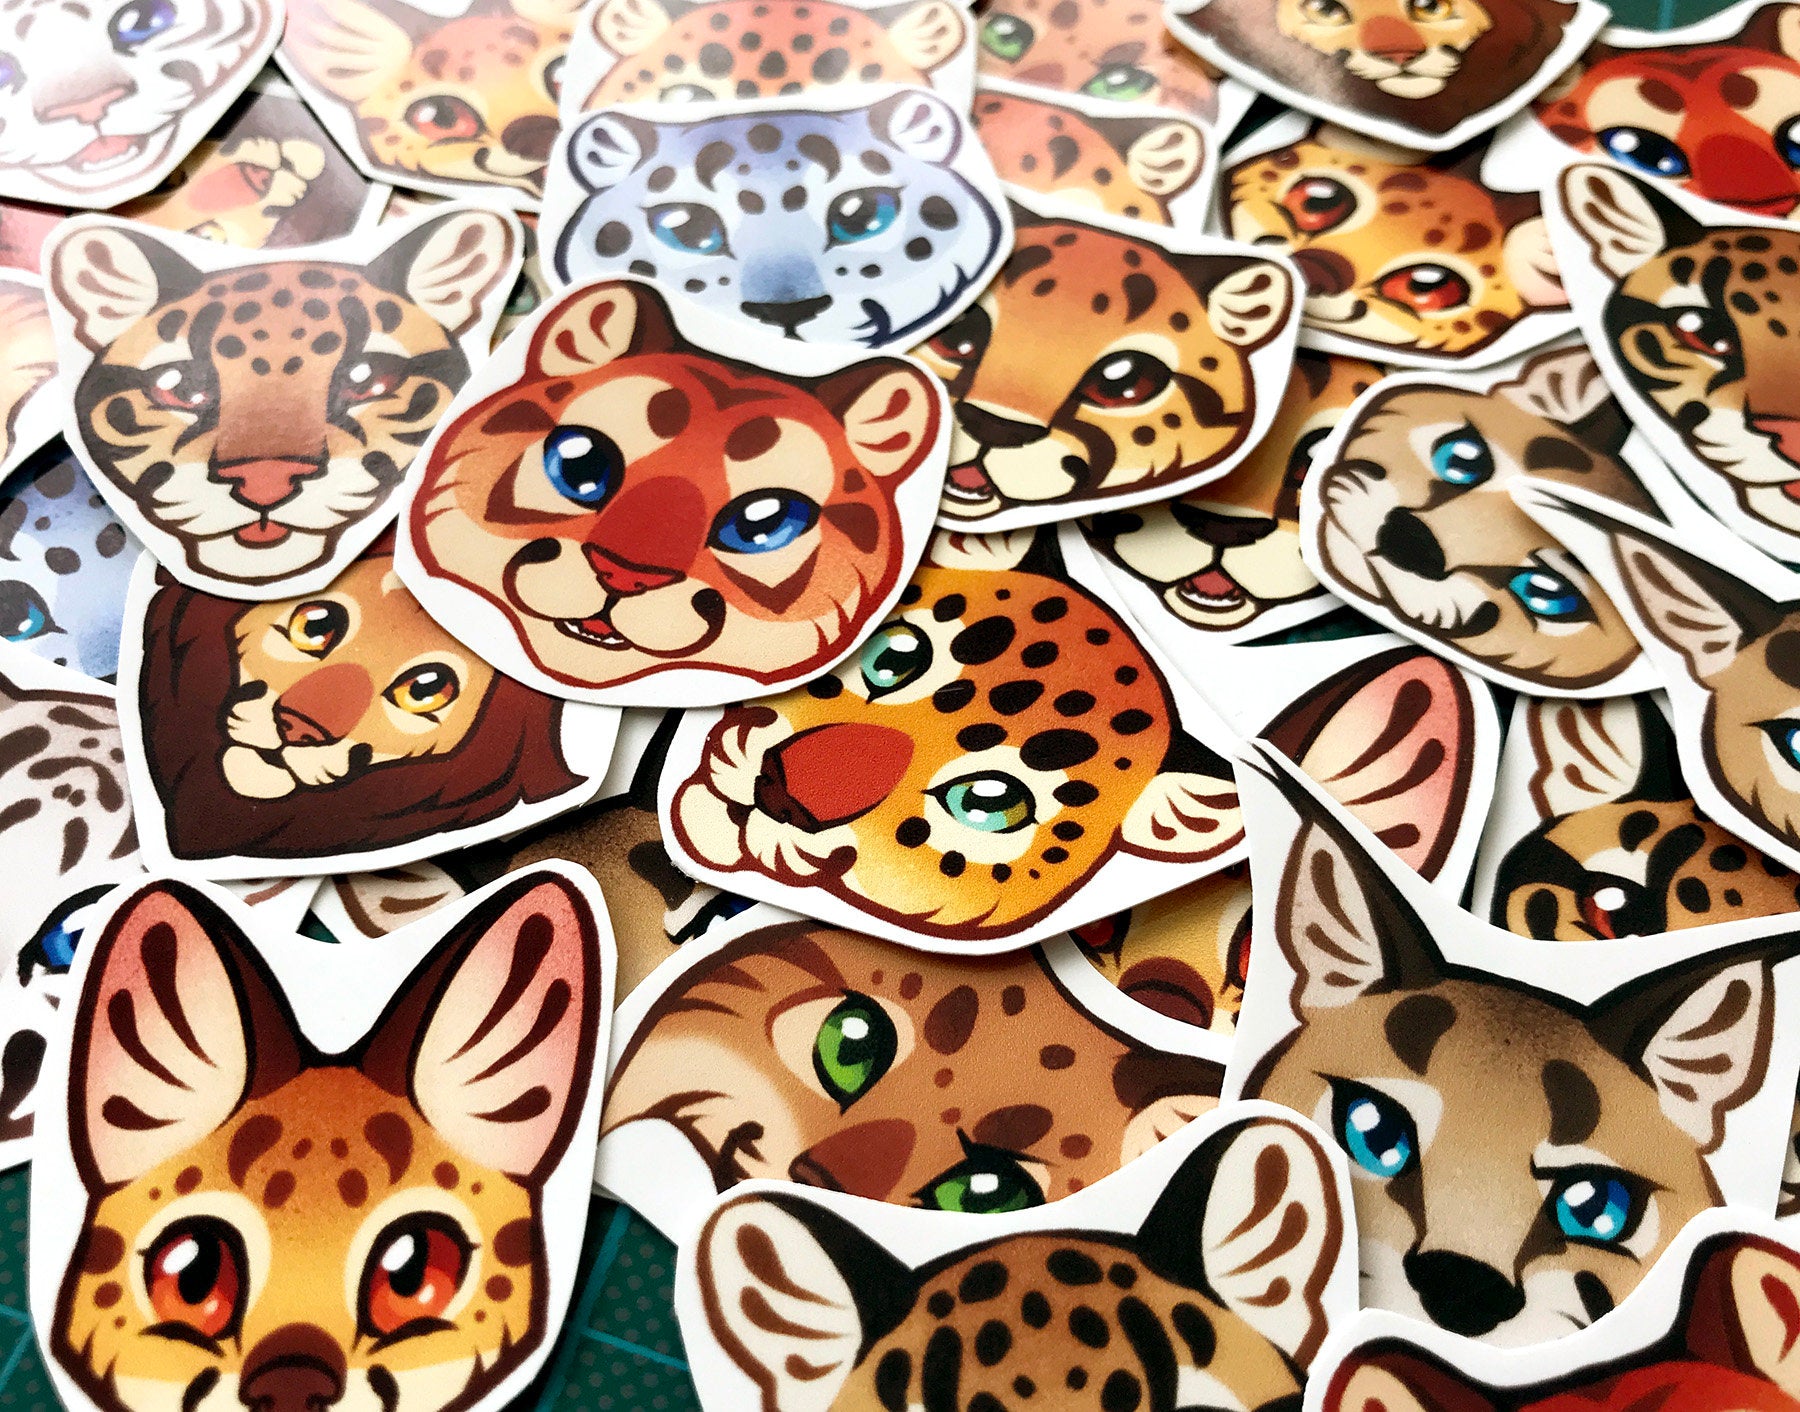 Cute Wild Cat Sticker Set – Shinepaw Design